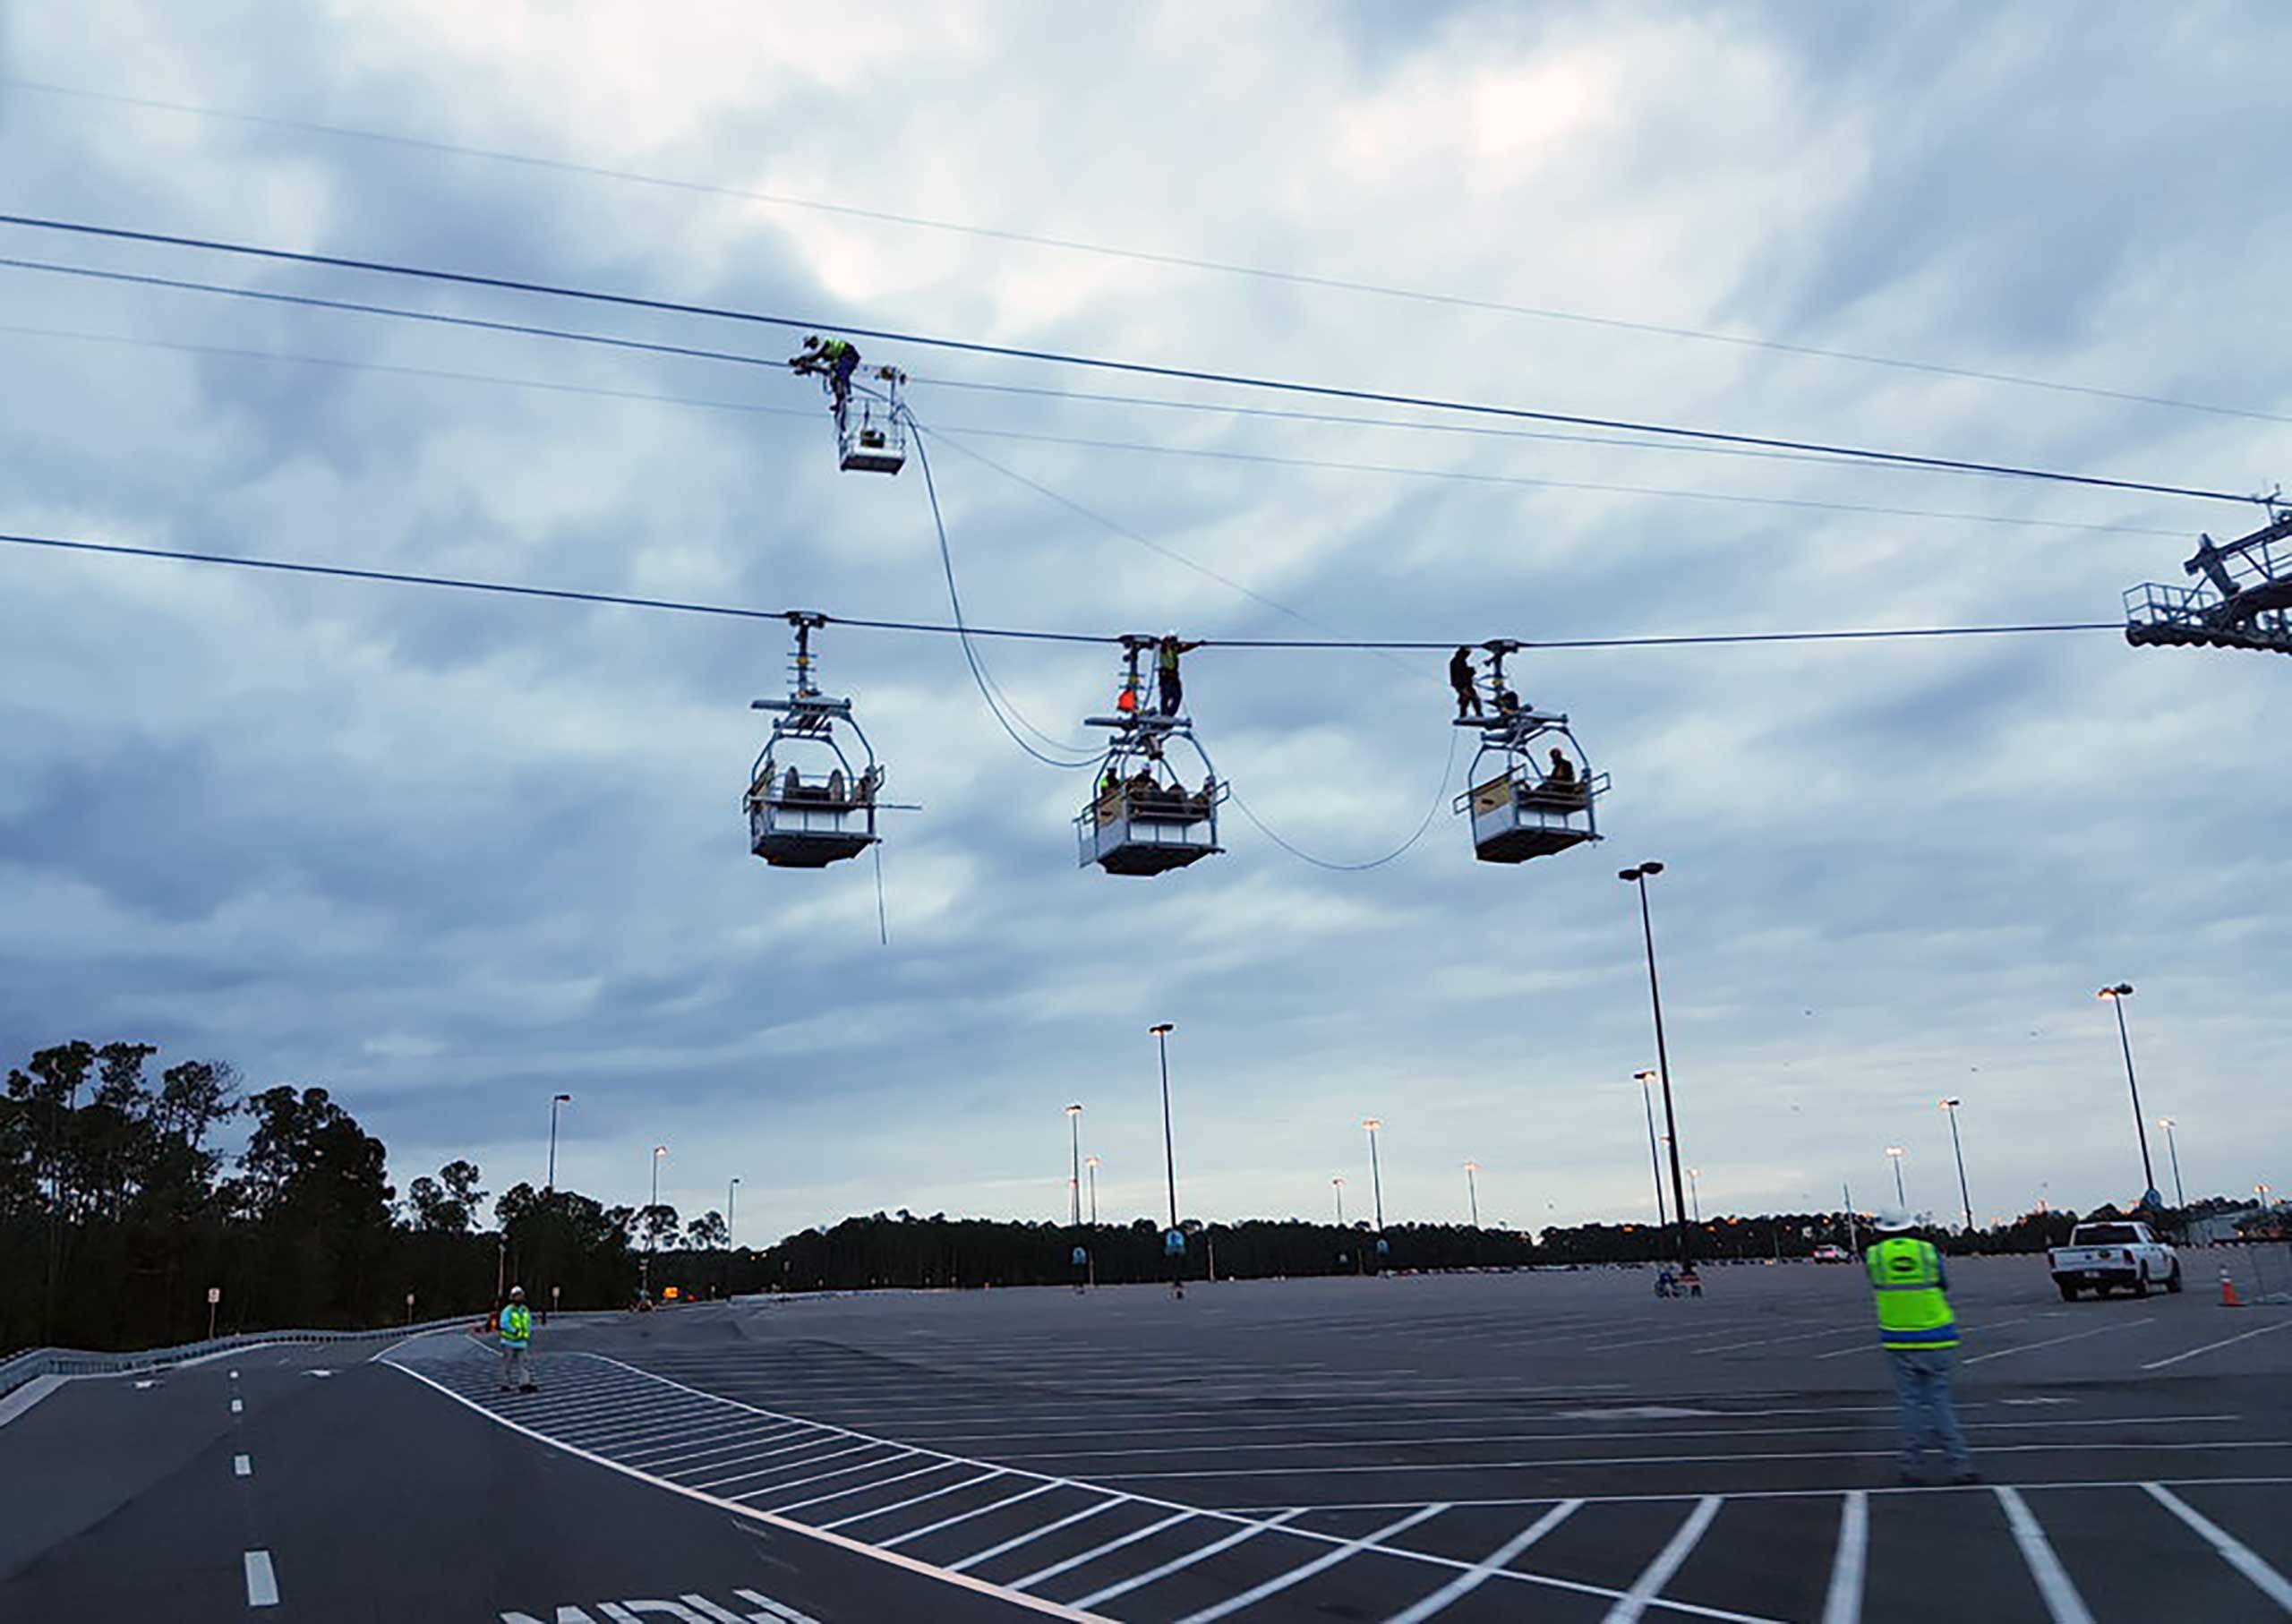 PHOTOS - Maintenance gondolas take to the Disney Skyliner cables